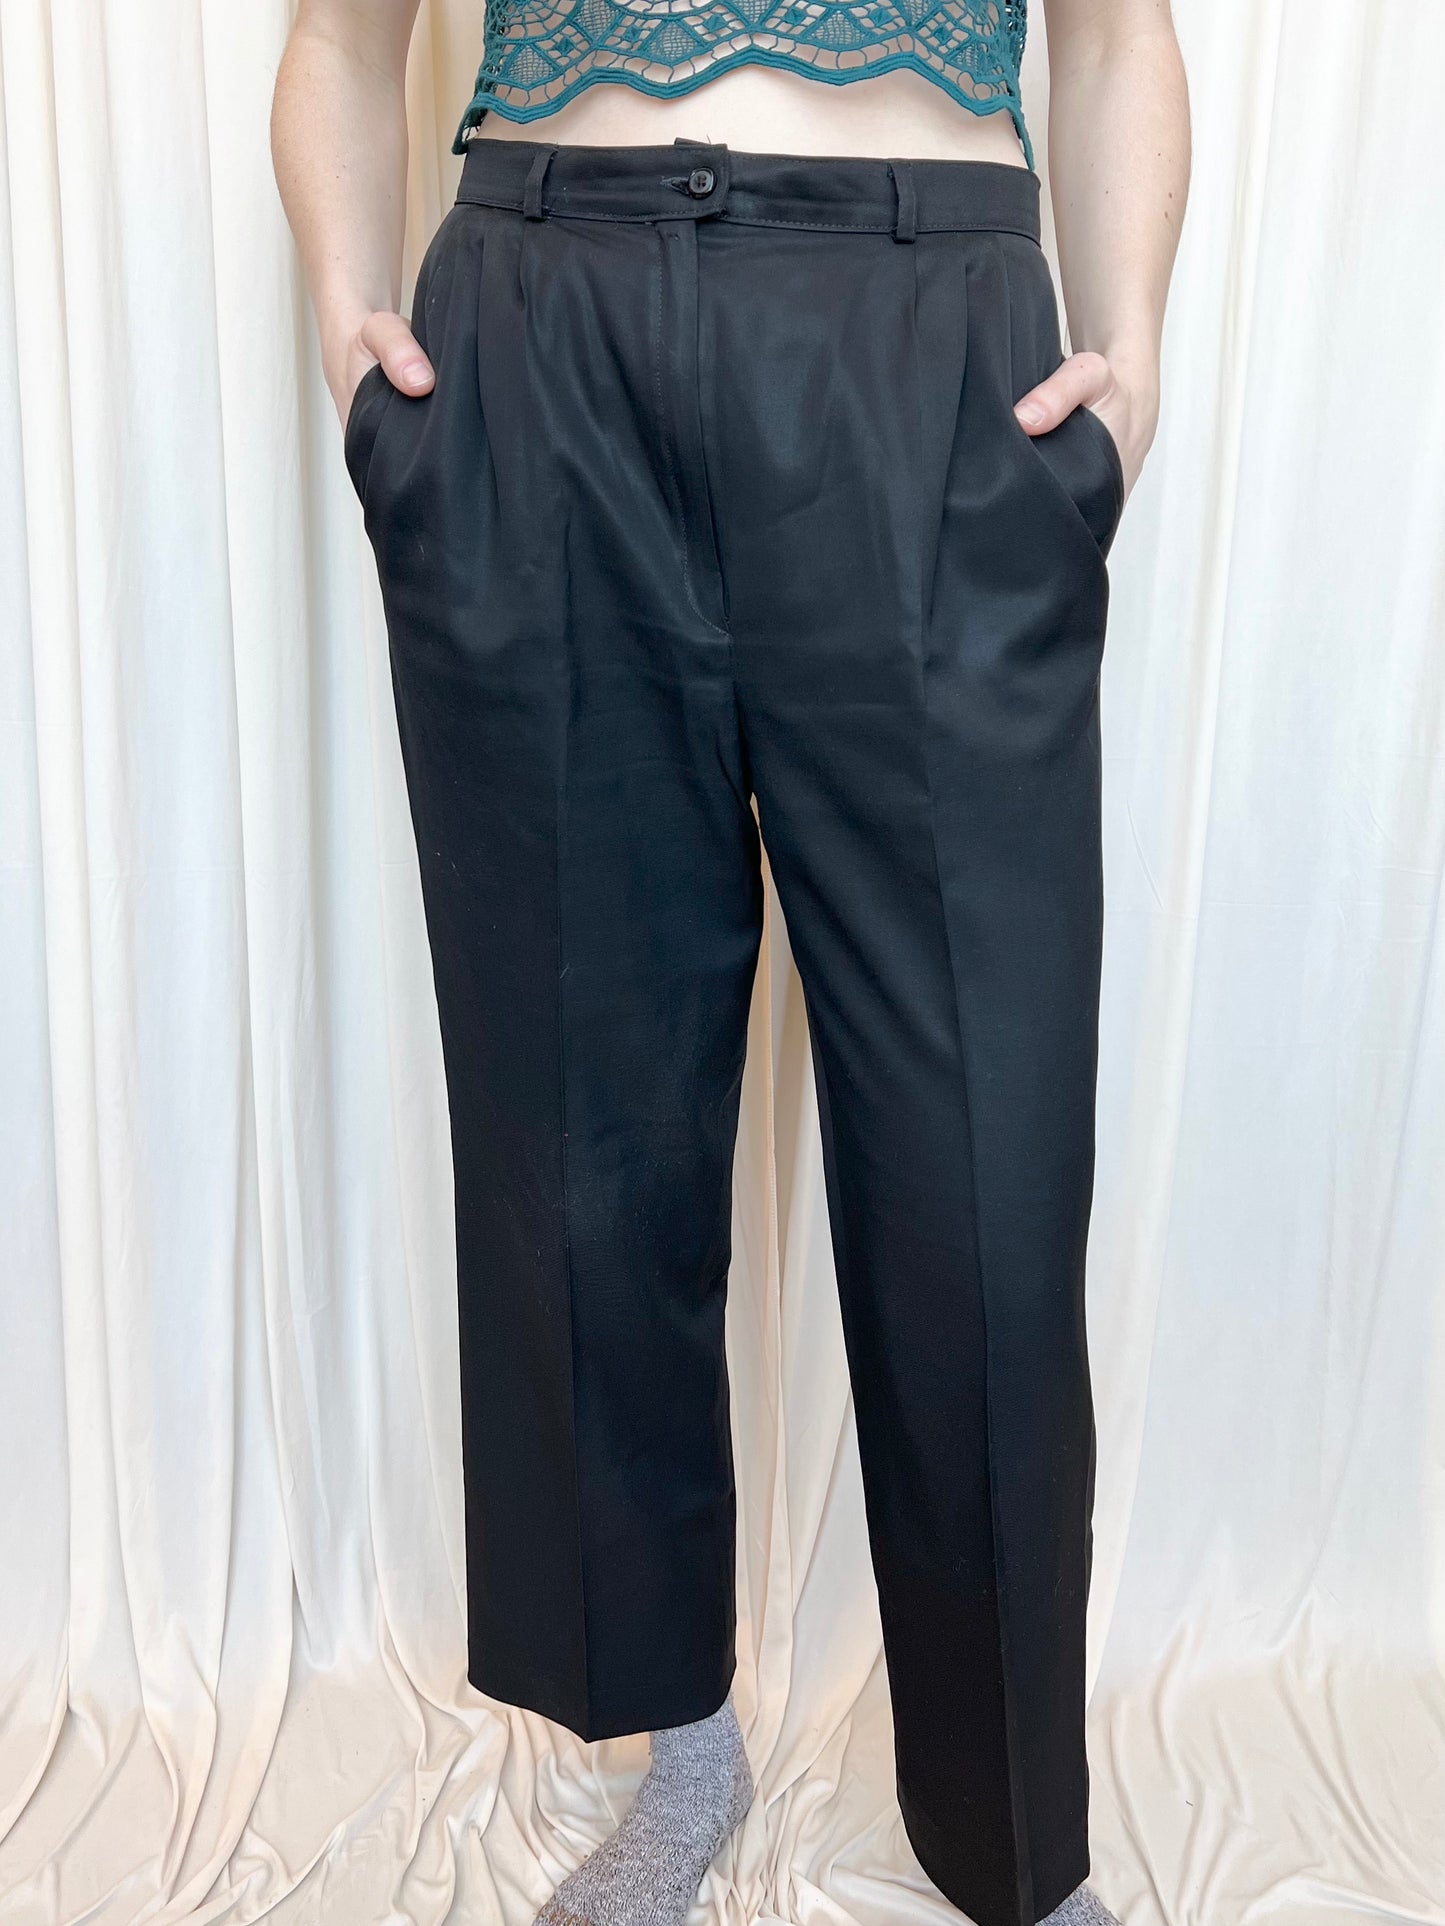 Vintage Shiny Black Dress Pants - 12